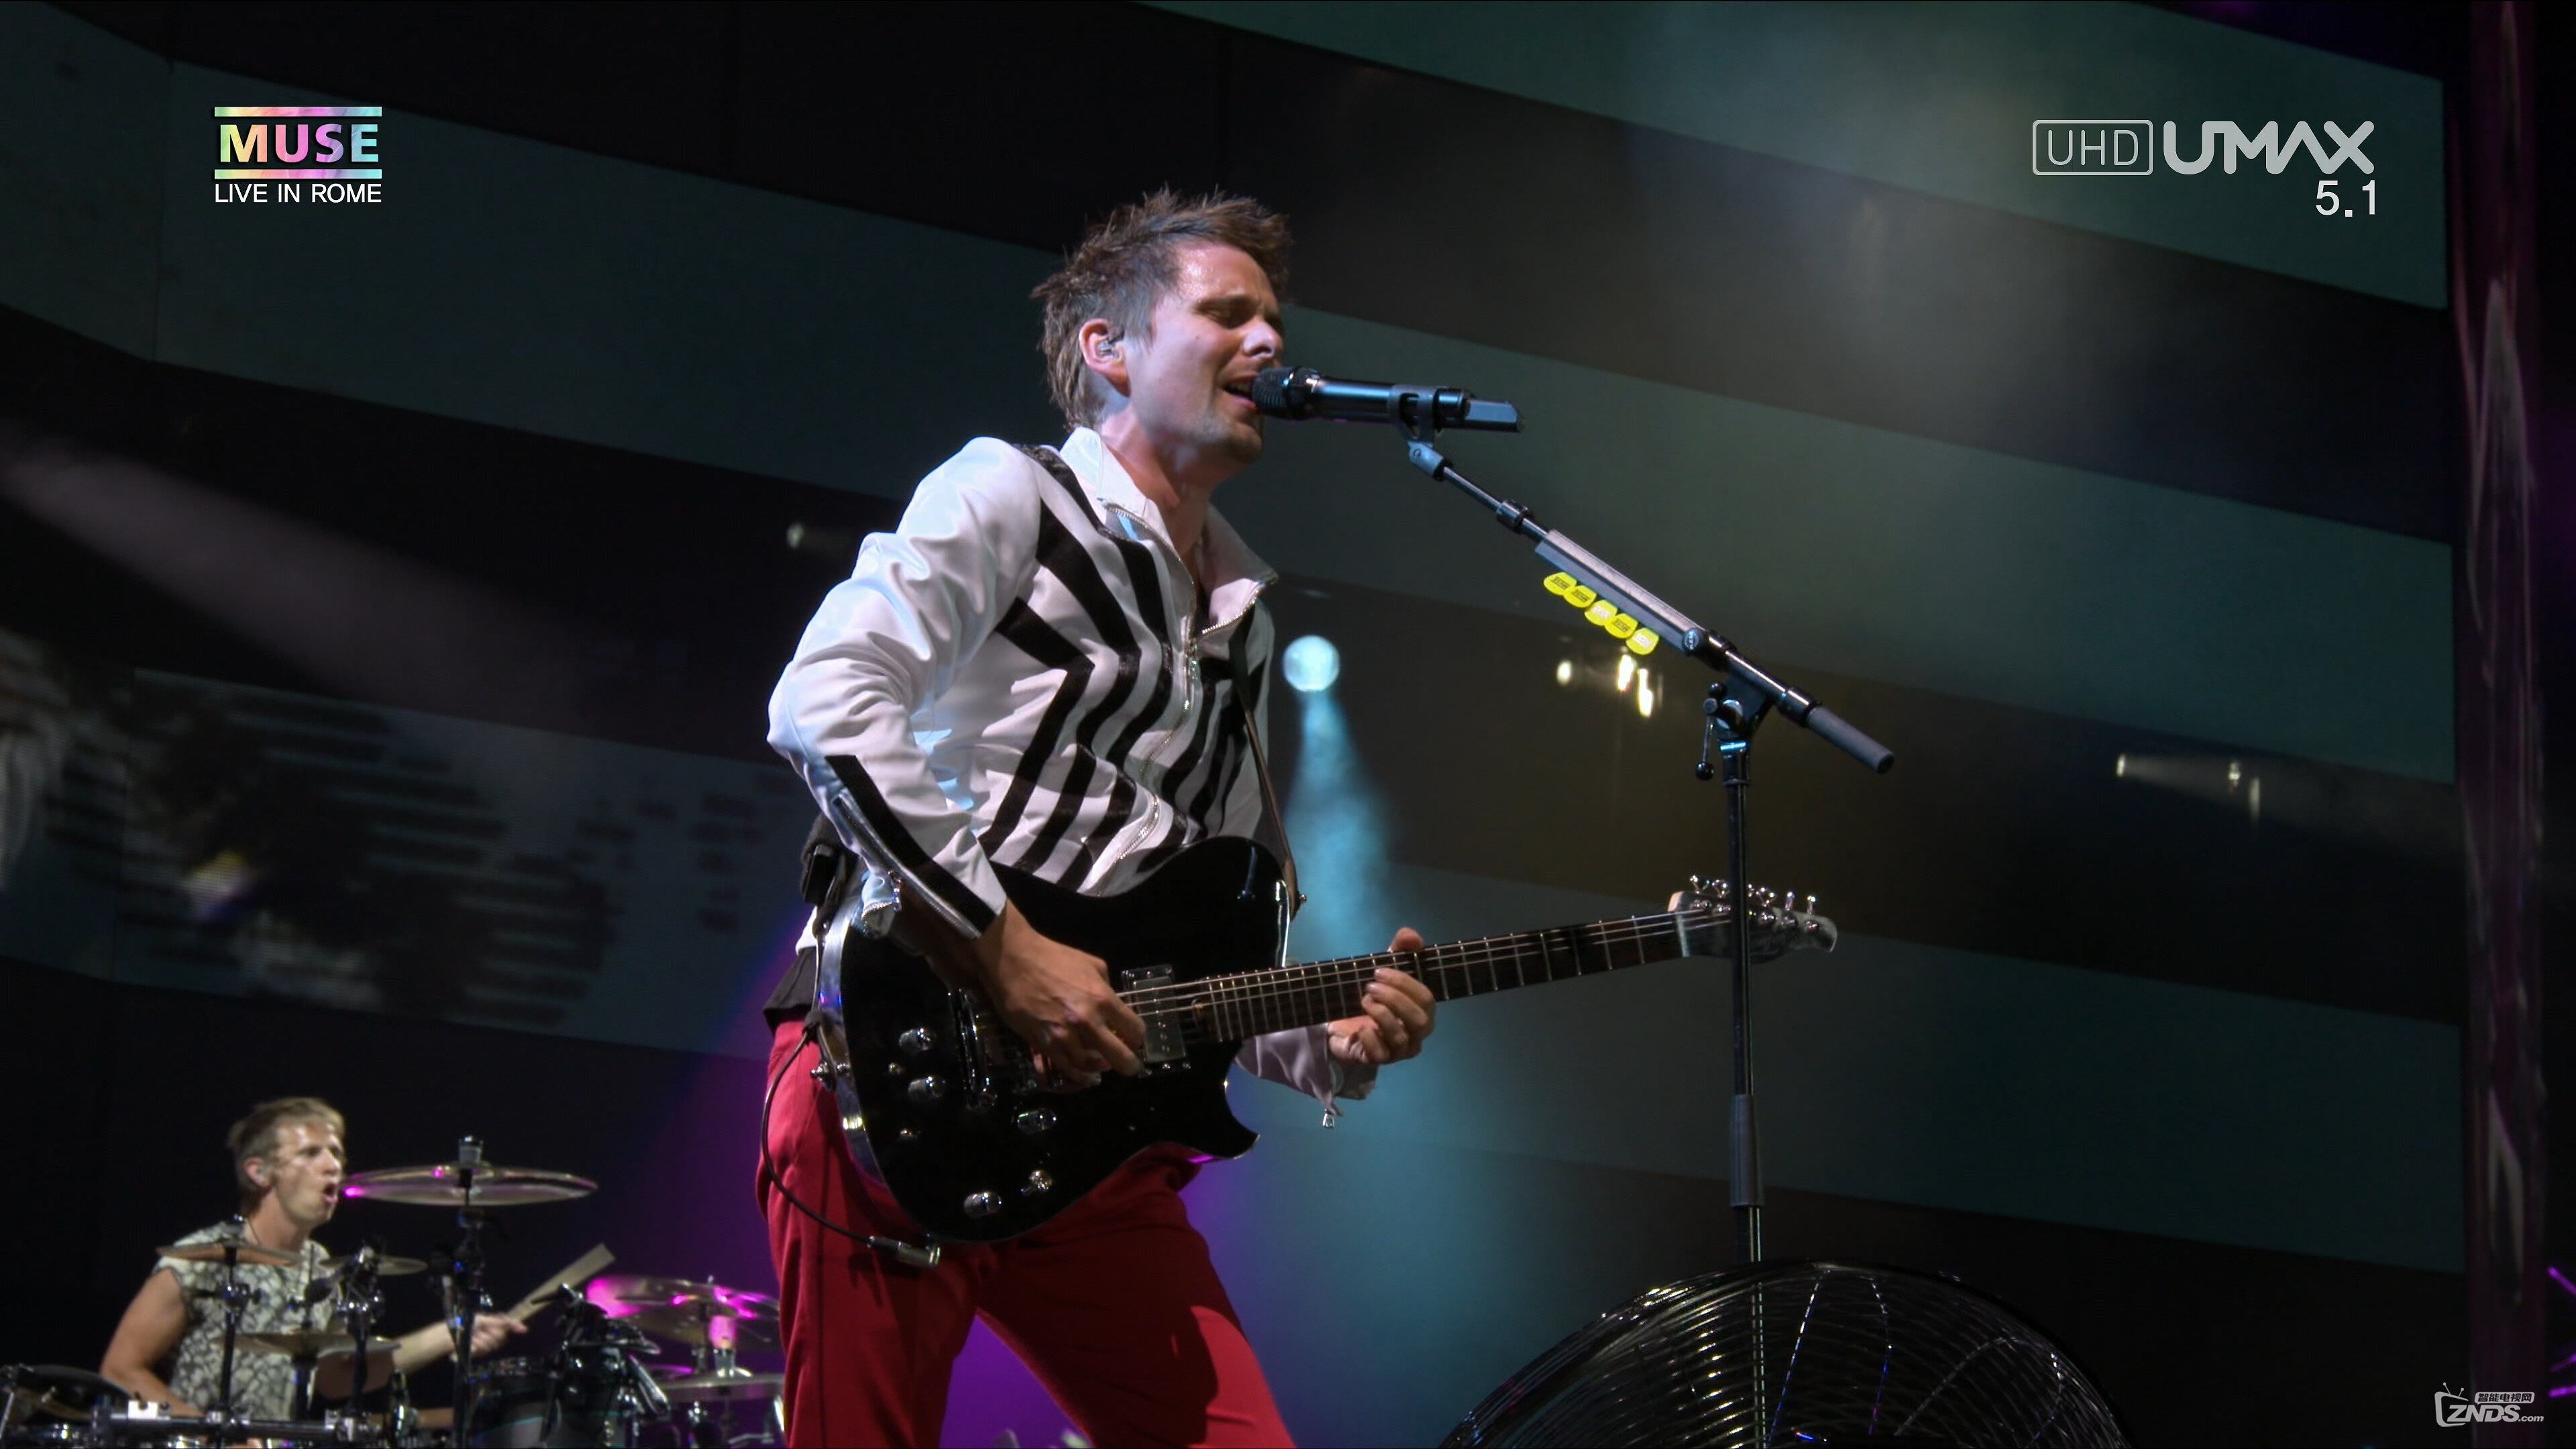 Muse.Live.At.Rome.Olympic.Stadium.2013.2160p.UHDTV.HEVC.mkv_20160312_230157.062.jpg